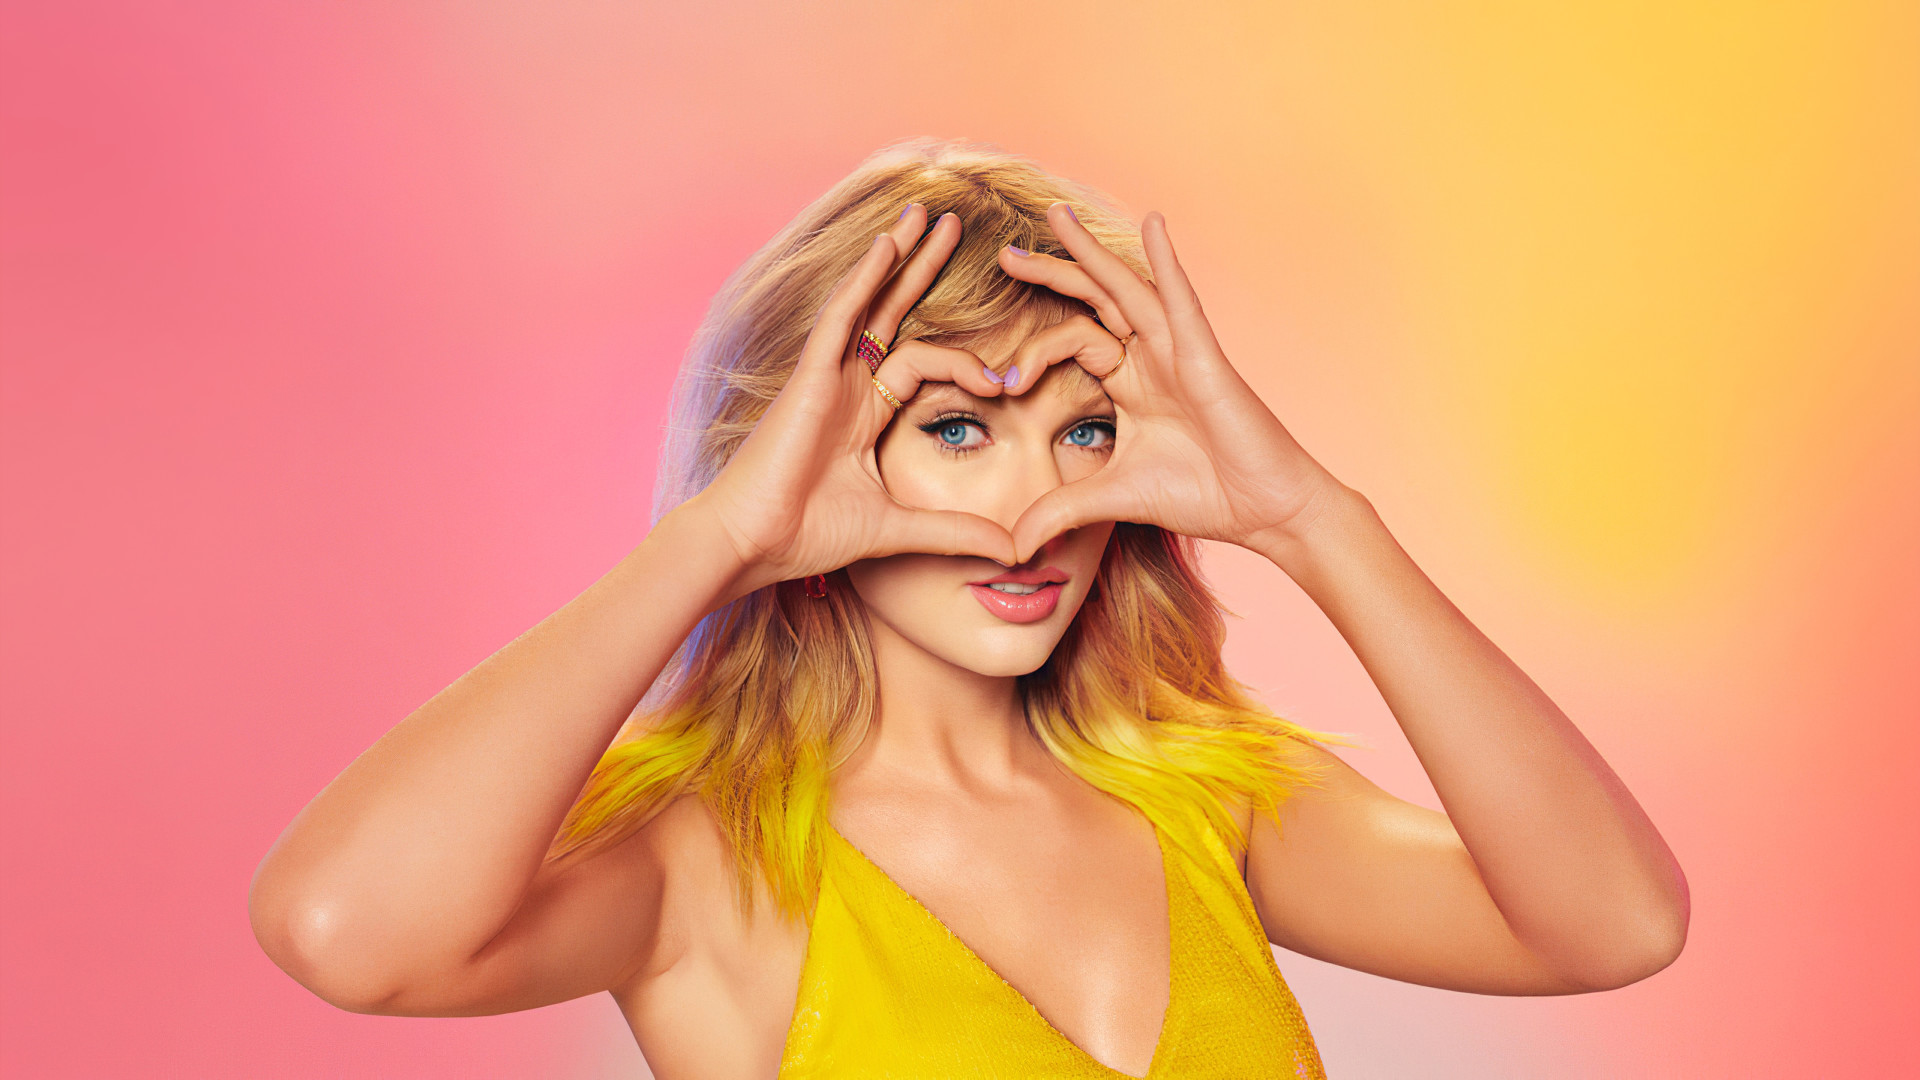 Taylor Swift 2019 Photoshoot - HD Wallpaper 